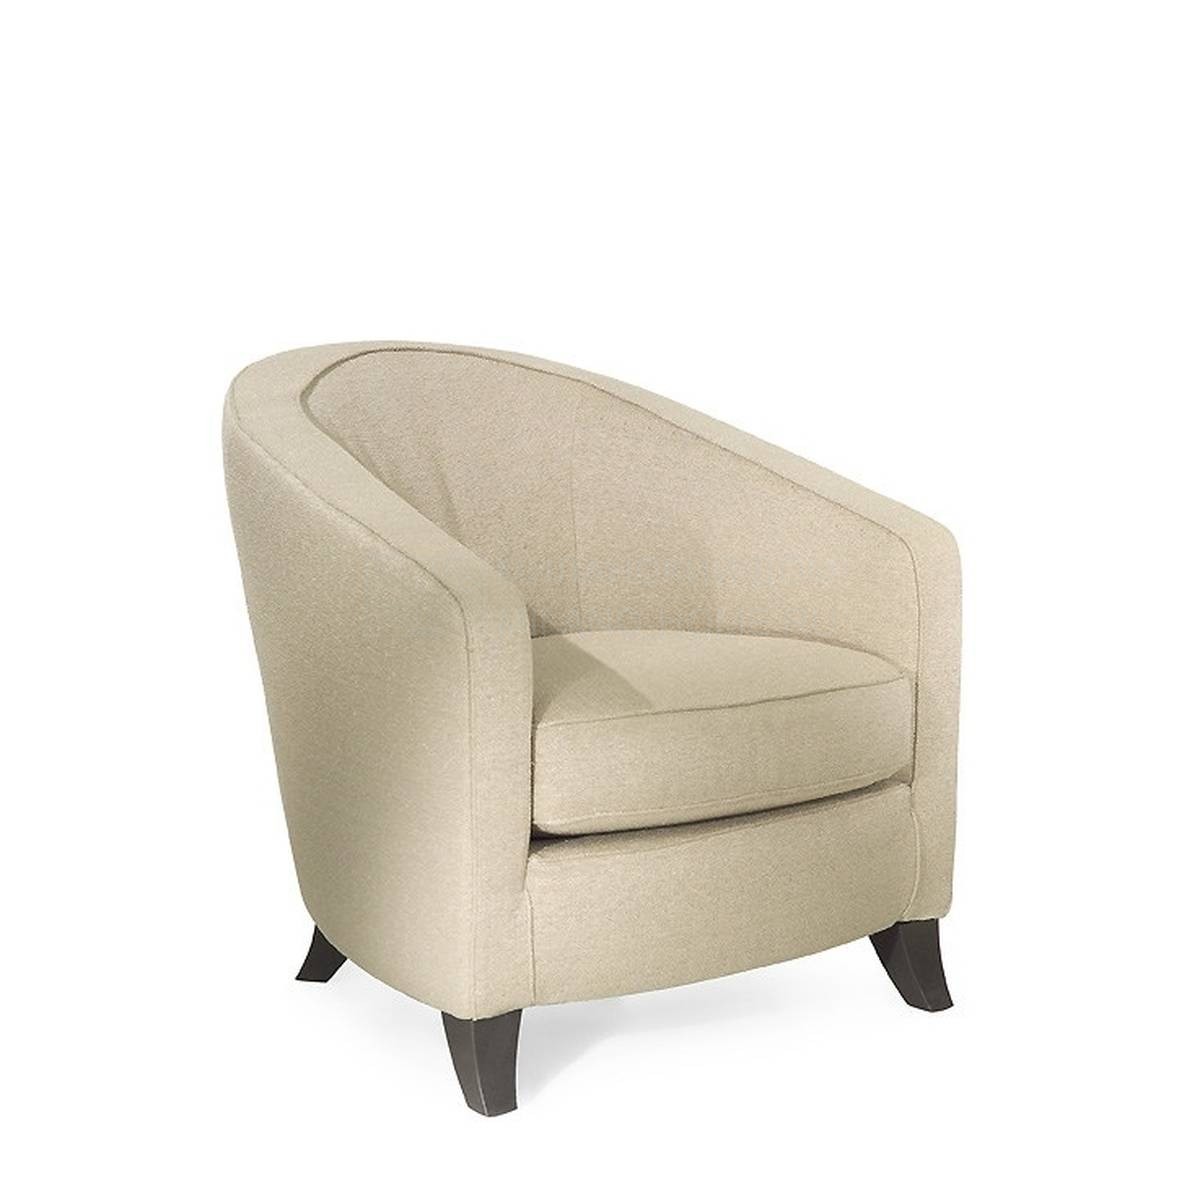 Круглое кресло Calendula armchair из Италии фабрики MARIONI